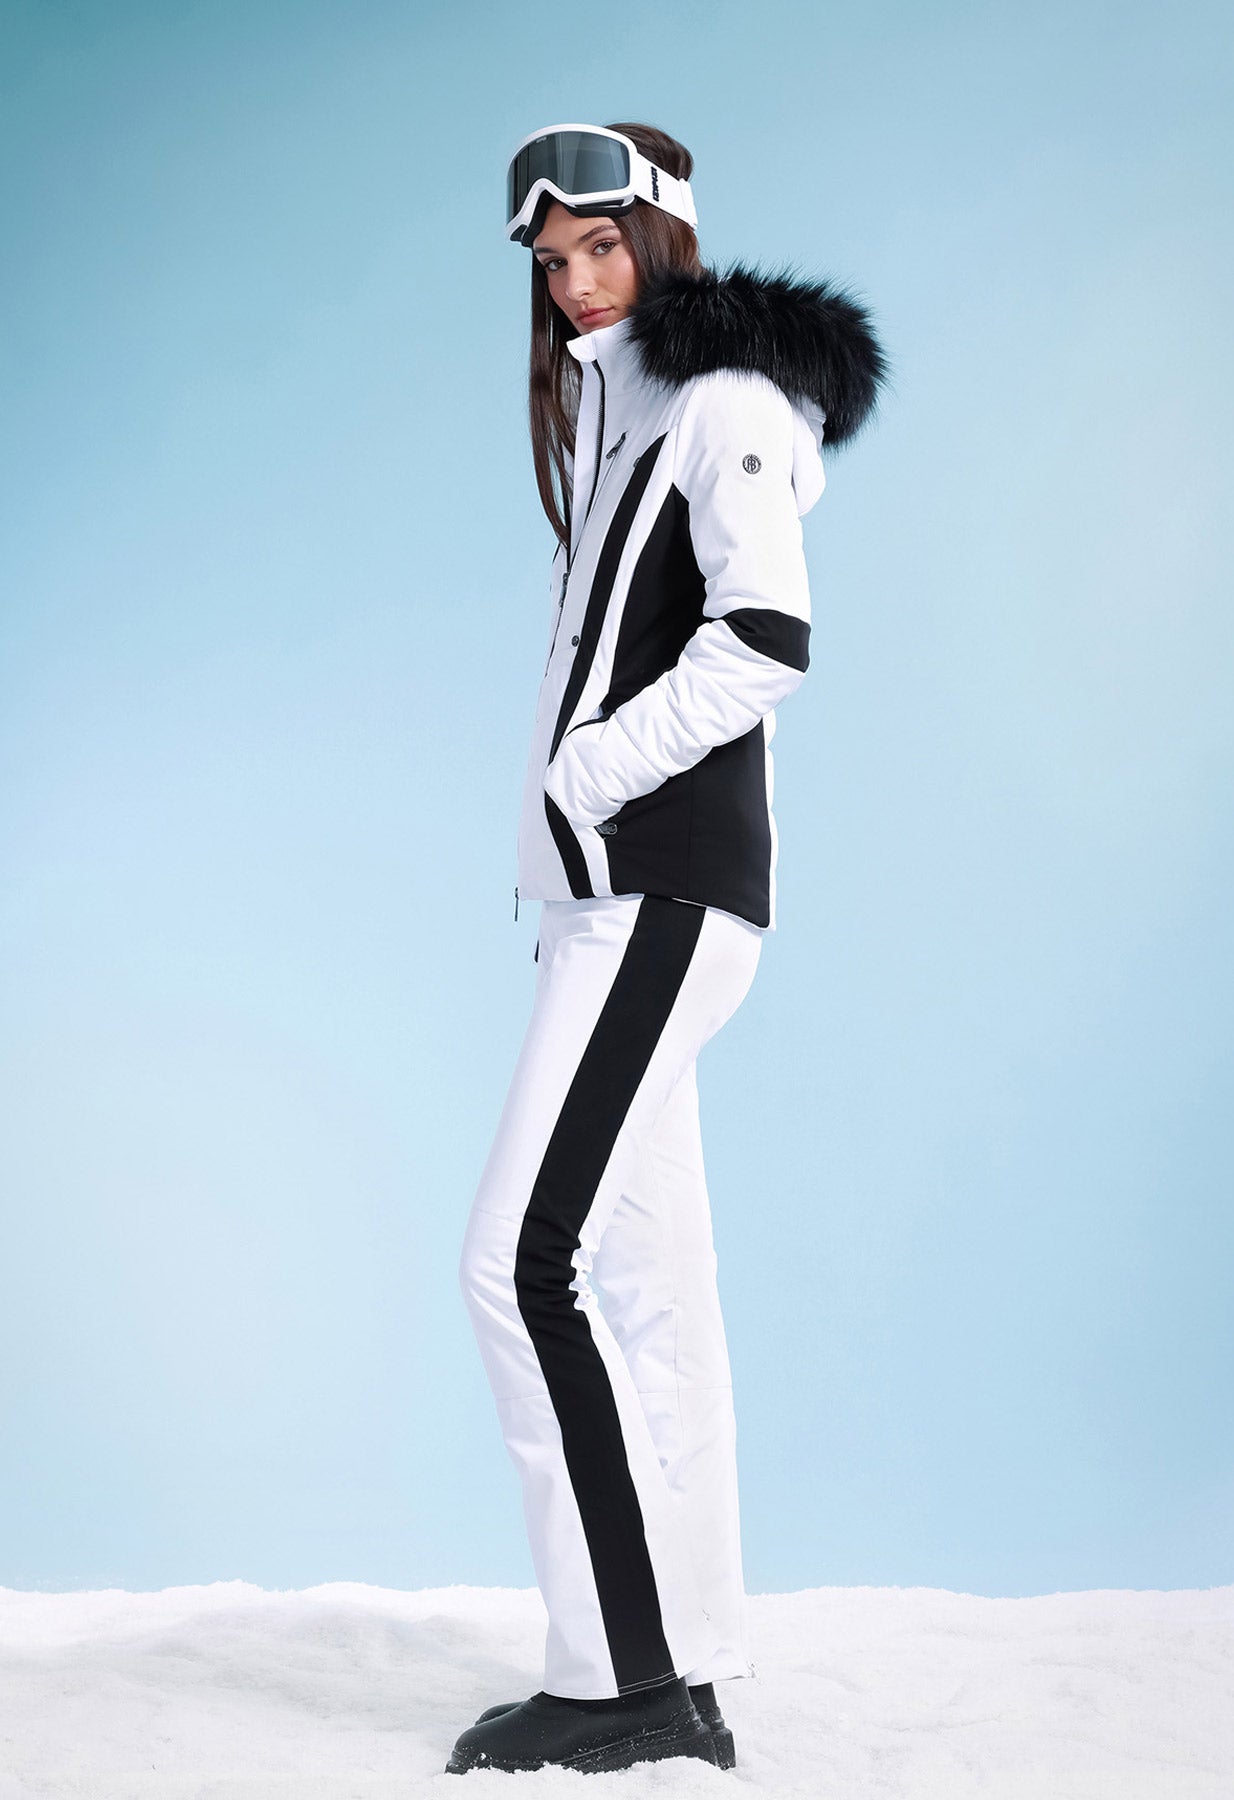 Poivre Blanc W23-0804 Ski Jacket in White and Black